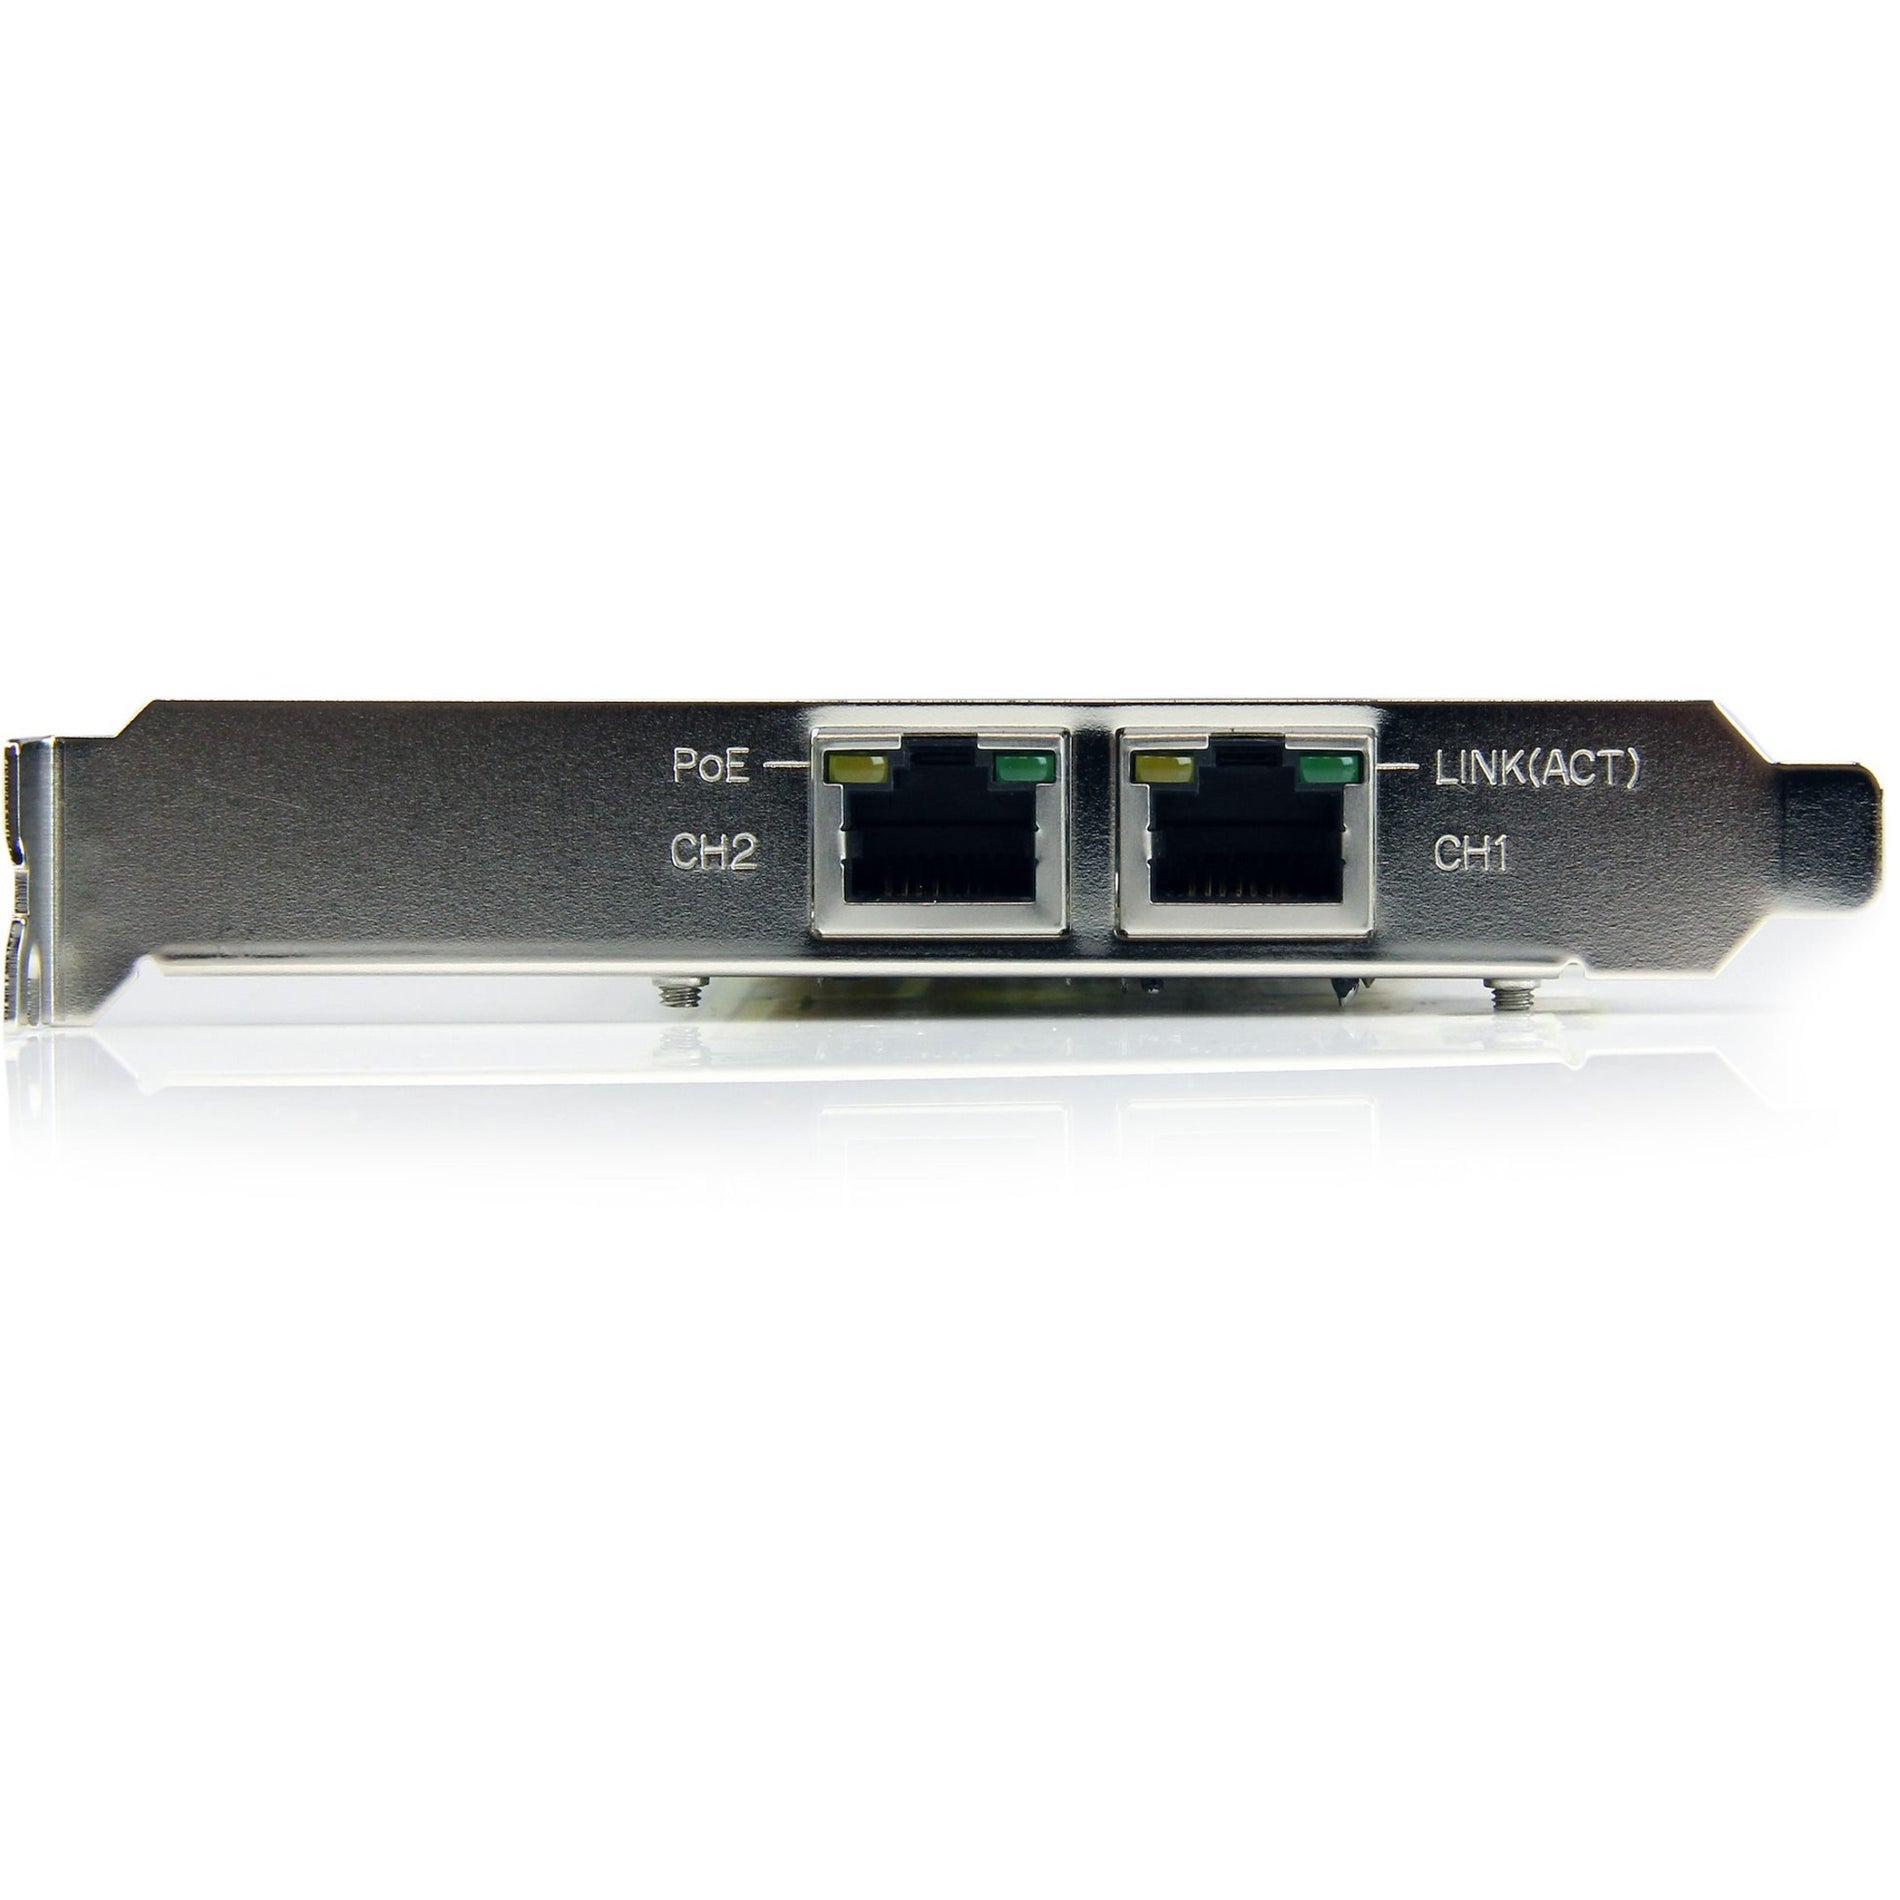 StarTech.com ST2000PEXPSE Dual Port PCI Express Gigabit Ethernet PCIe Network Card Adapter - PoE/PSE, High-Speed Internet Connectivity for Your PC